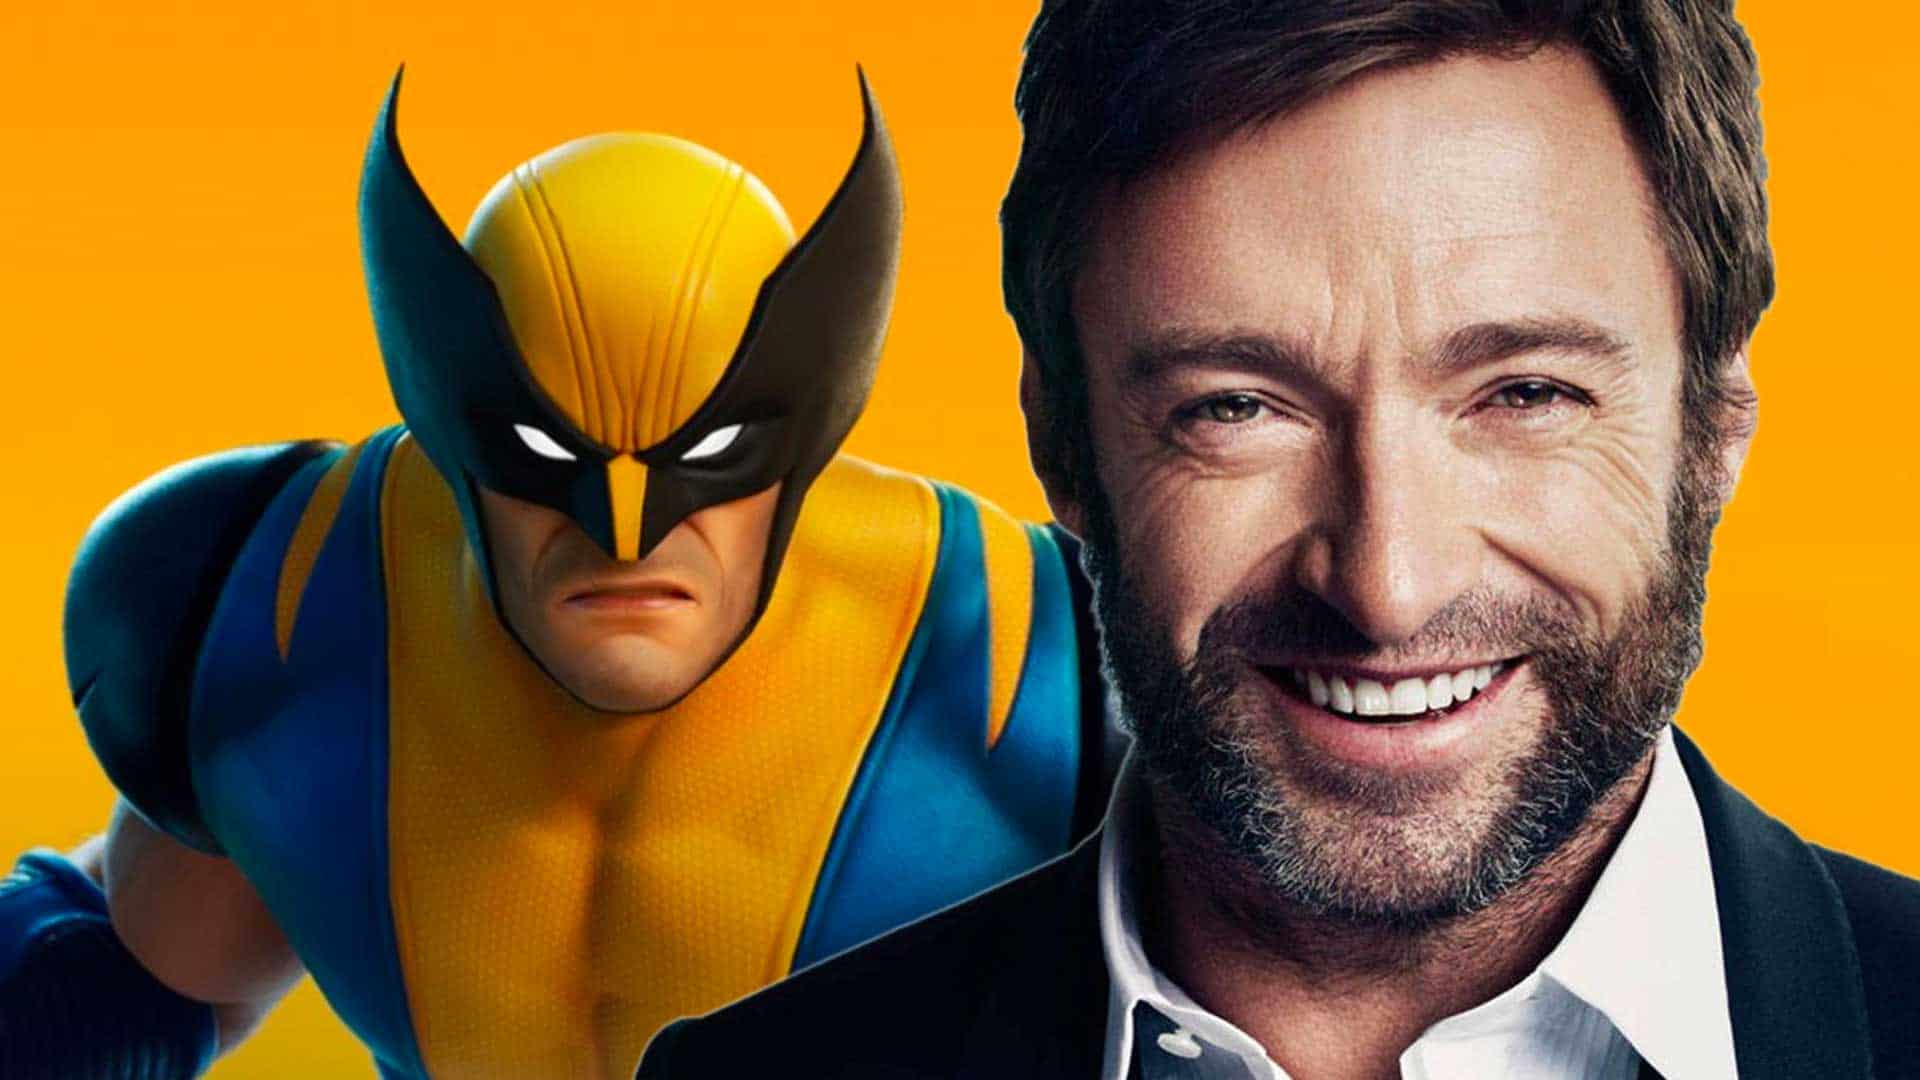 Wolverine In The MCU: Will X-Men's Hugh Jackman Return?